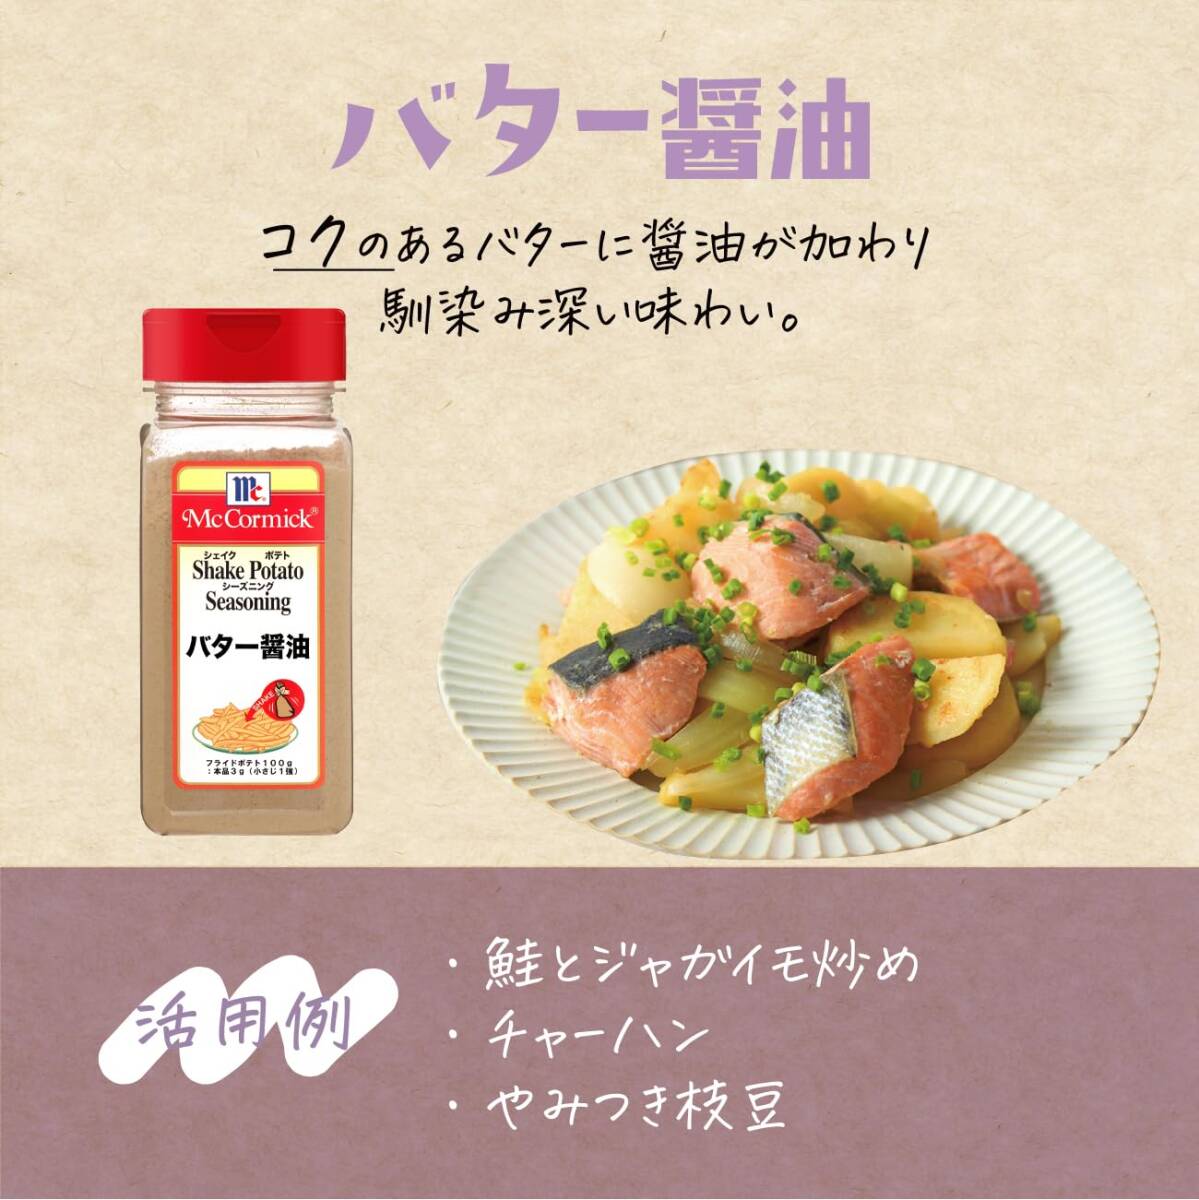 mako-mik potato She's person g butter soy sauce 350g